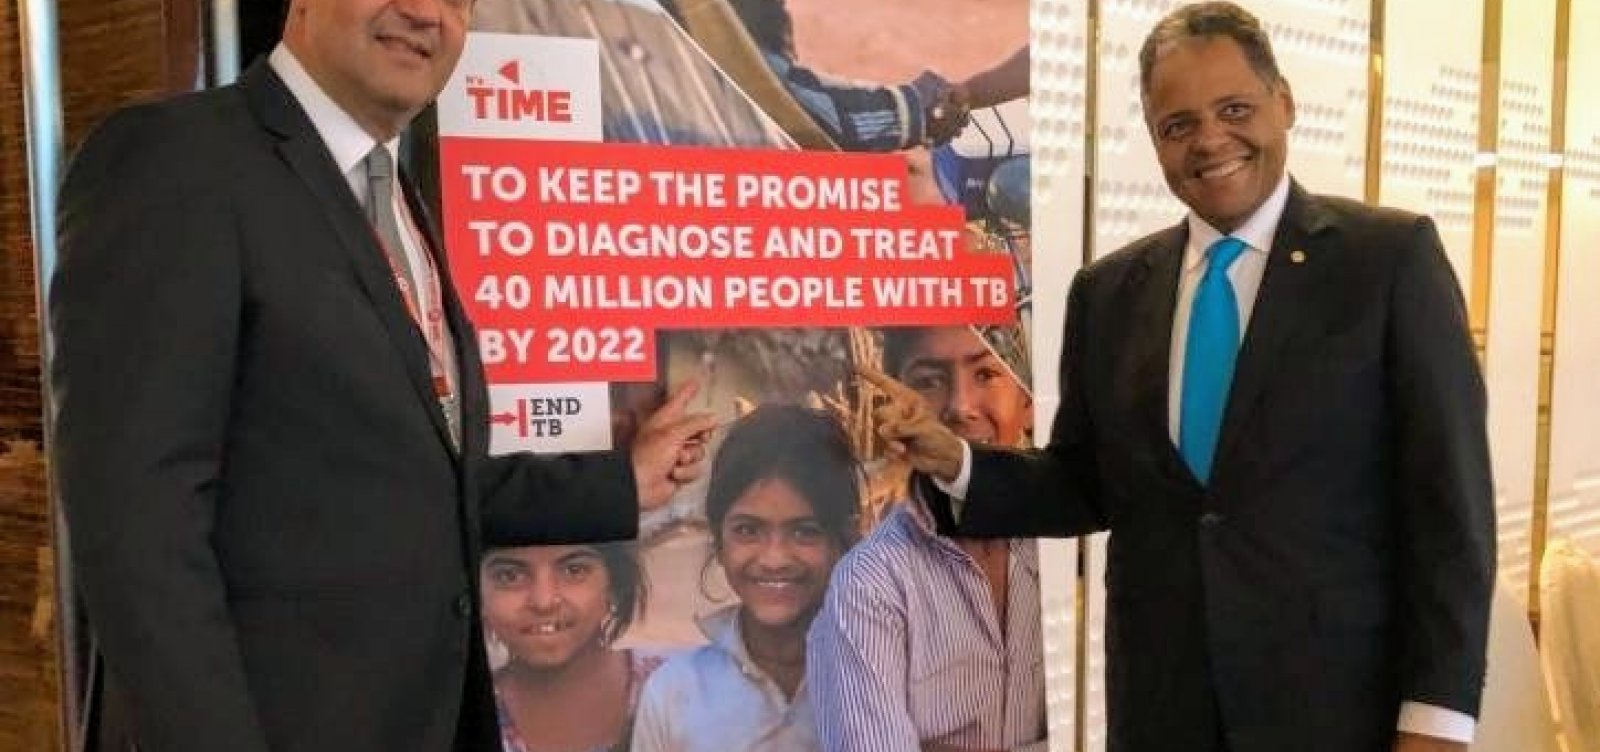 Ministro da Saúde debate na Indonésia plano mundial para erradicar tuberculose